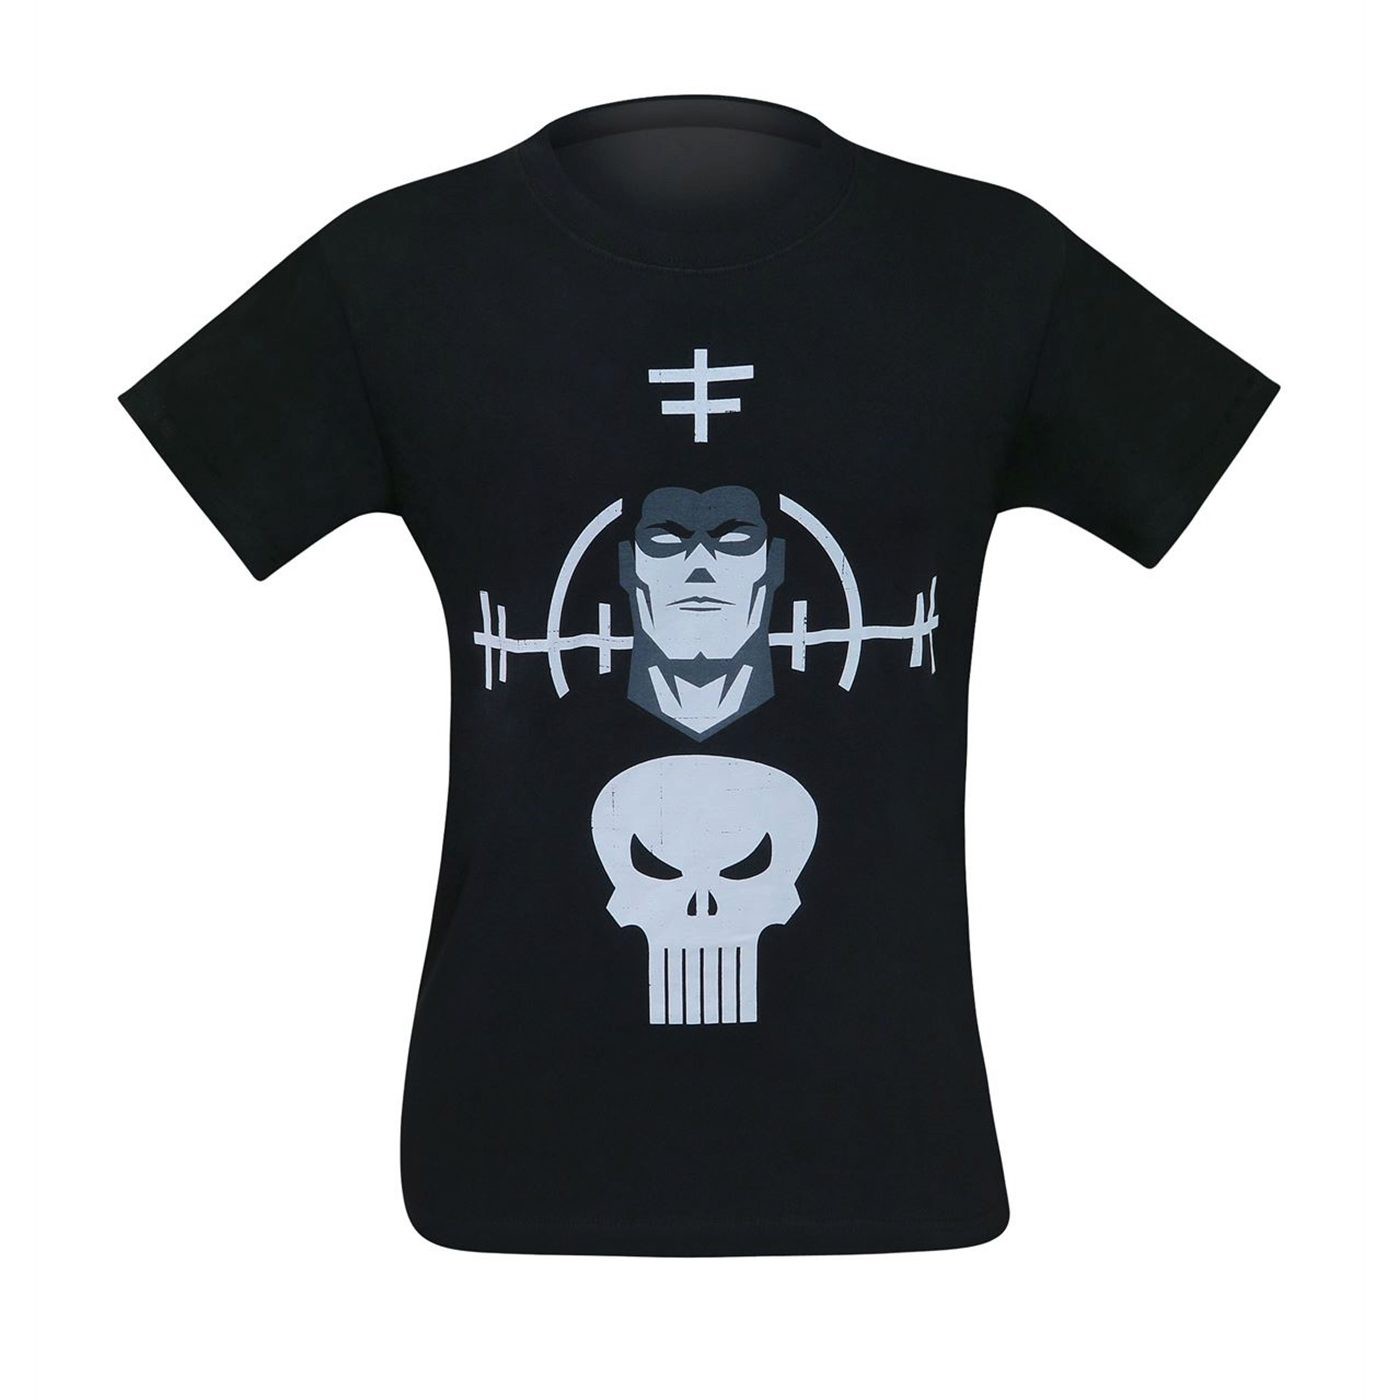 Punisher and Target Minimalist Men's T-Shirt